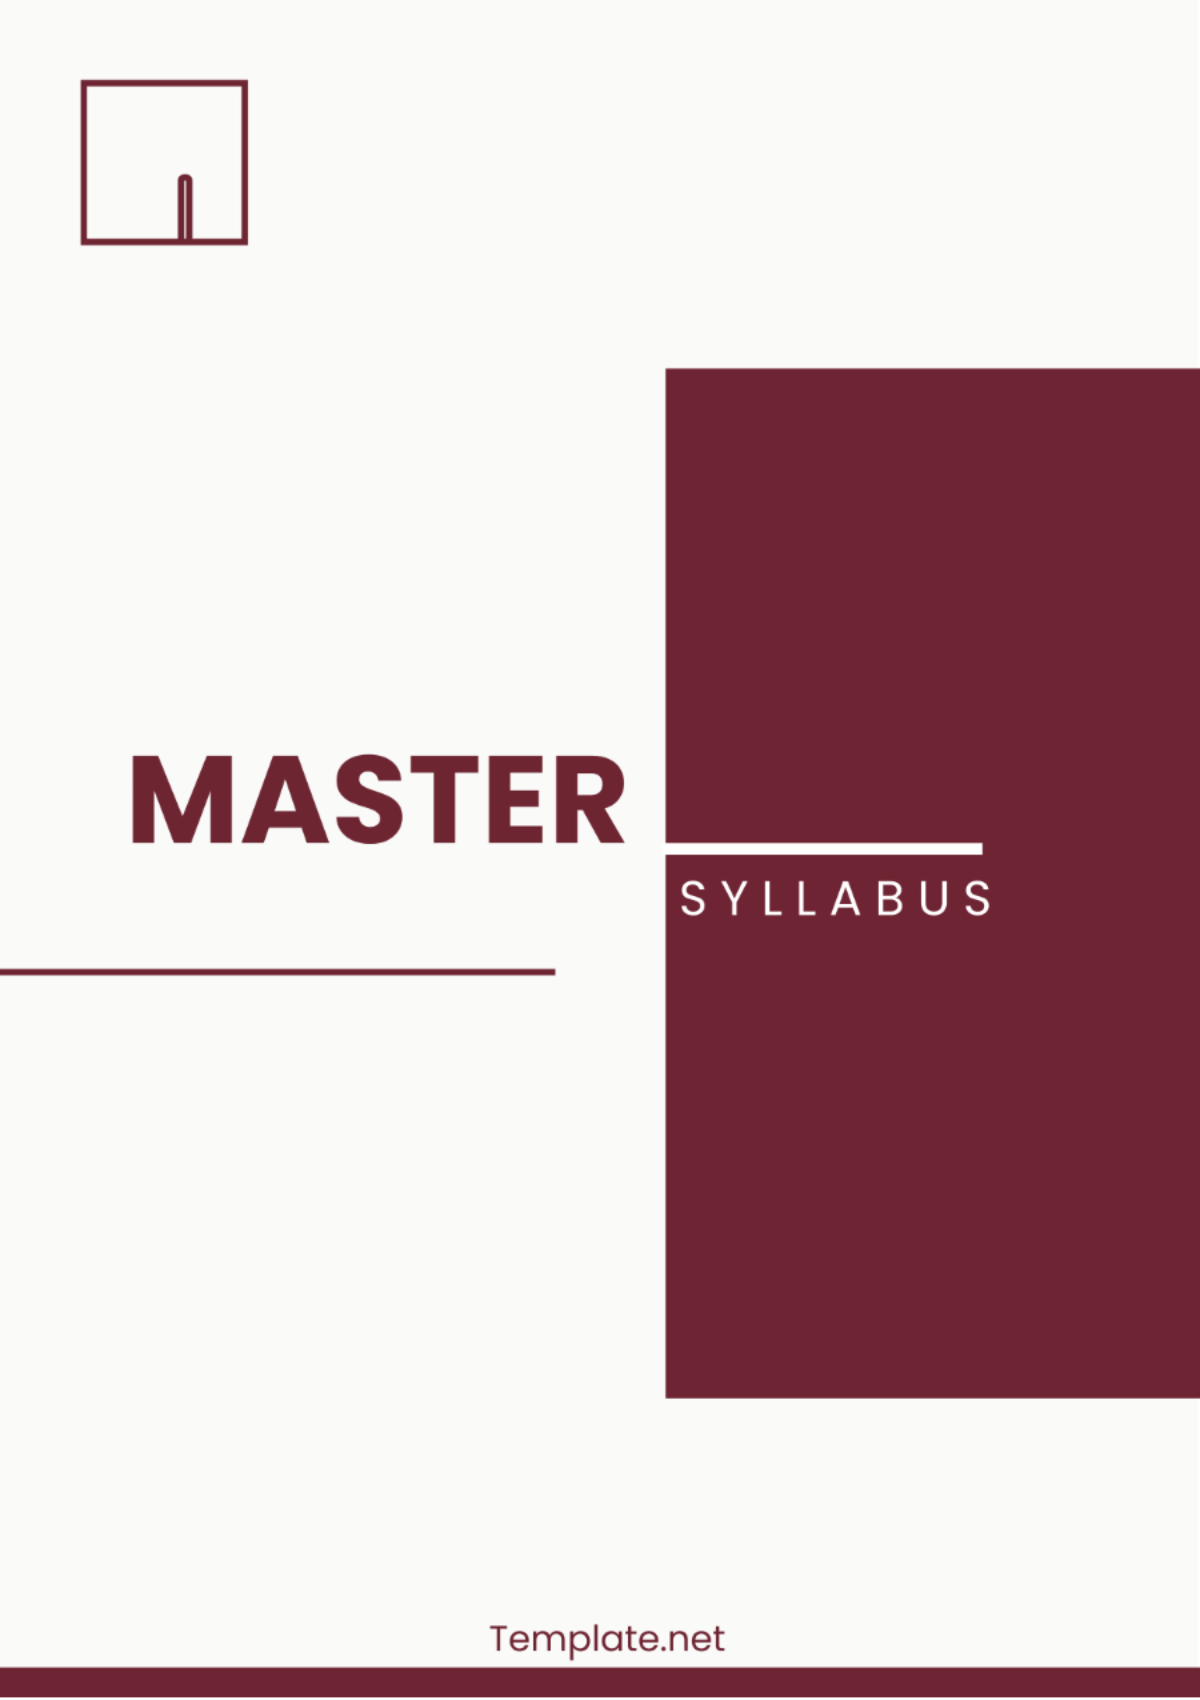 Master Syllabus Template